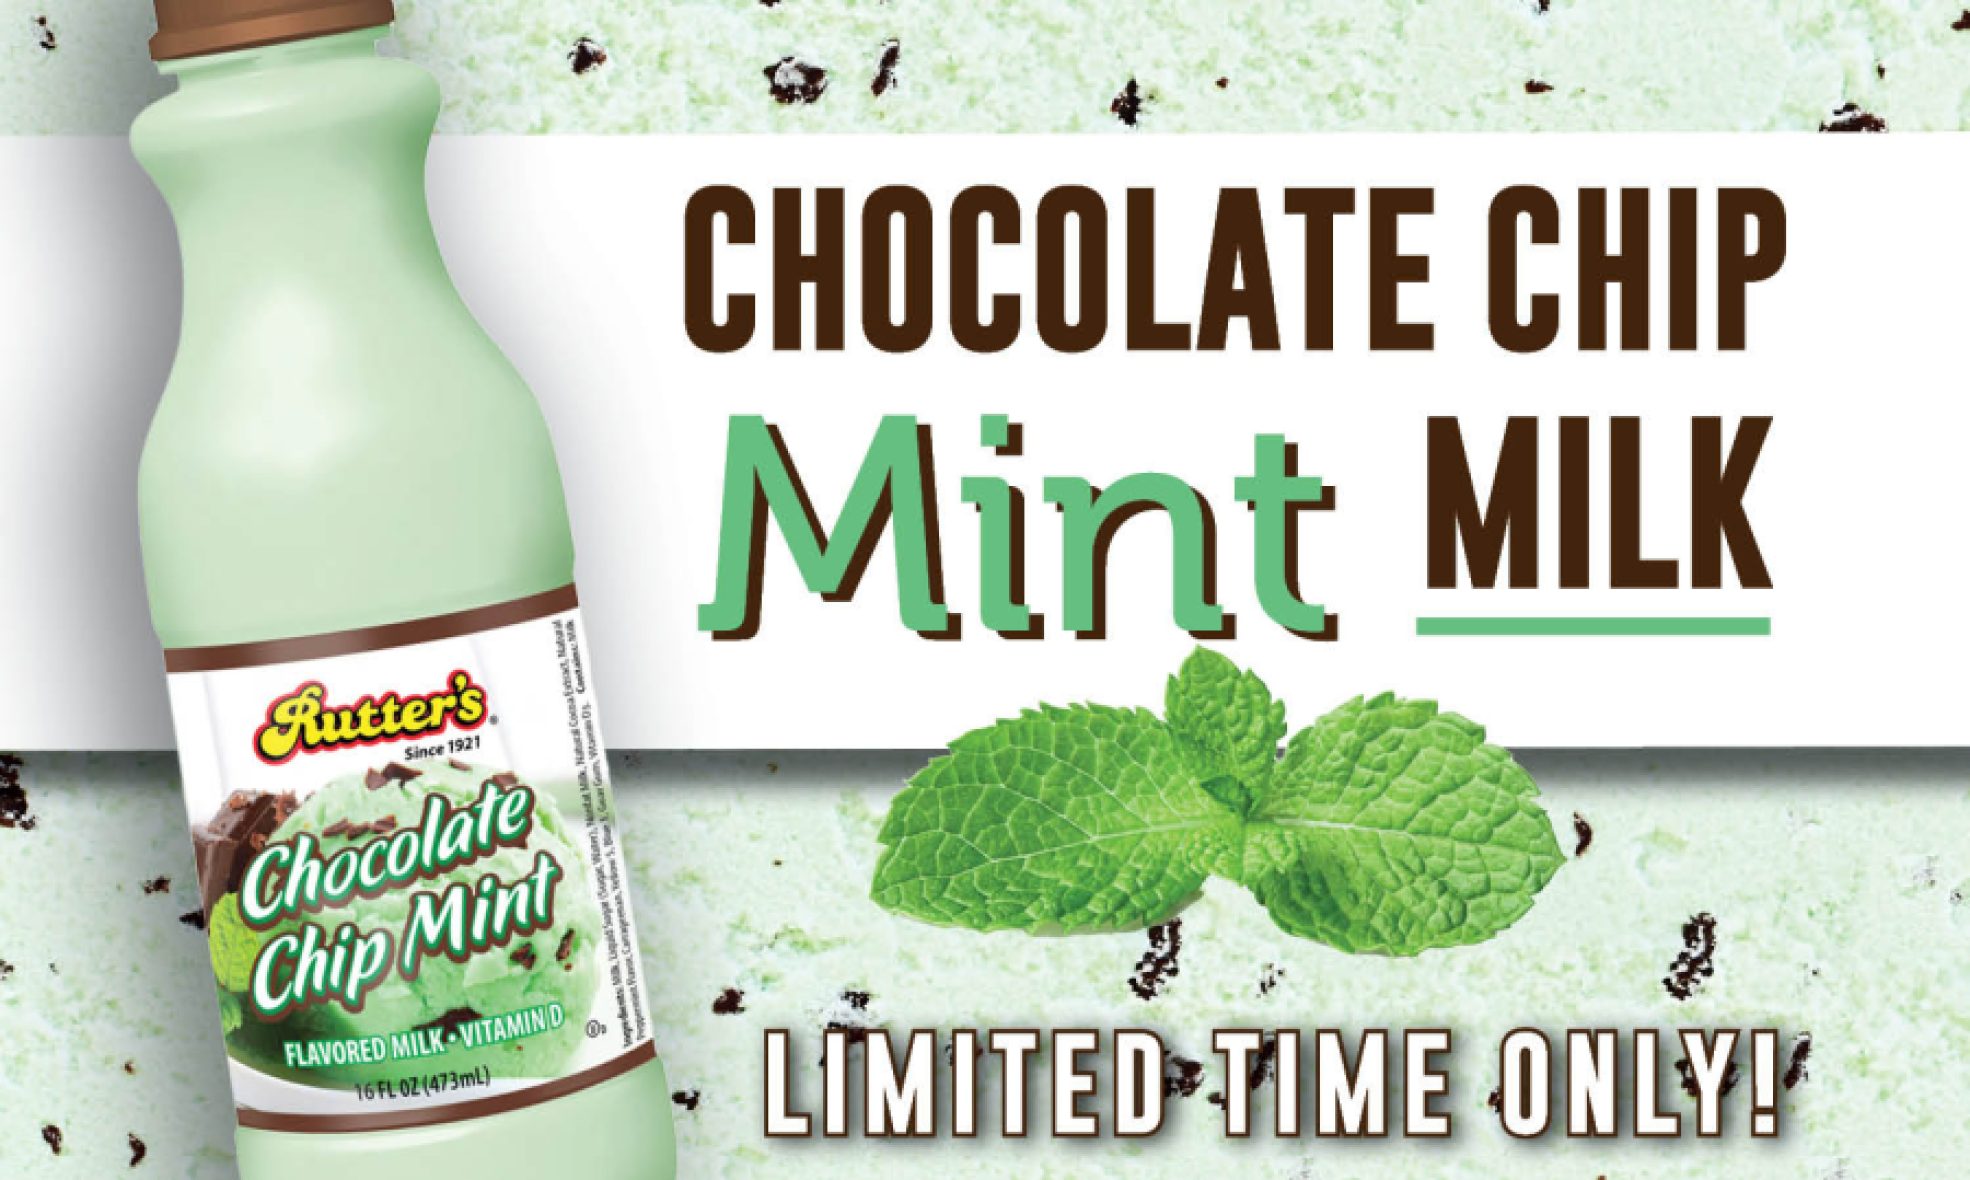 Chocolate Chip Mint Milk